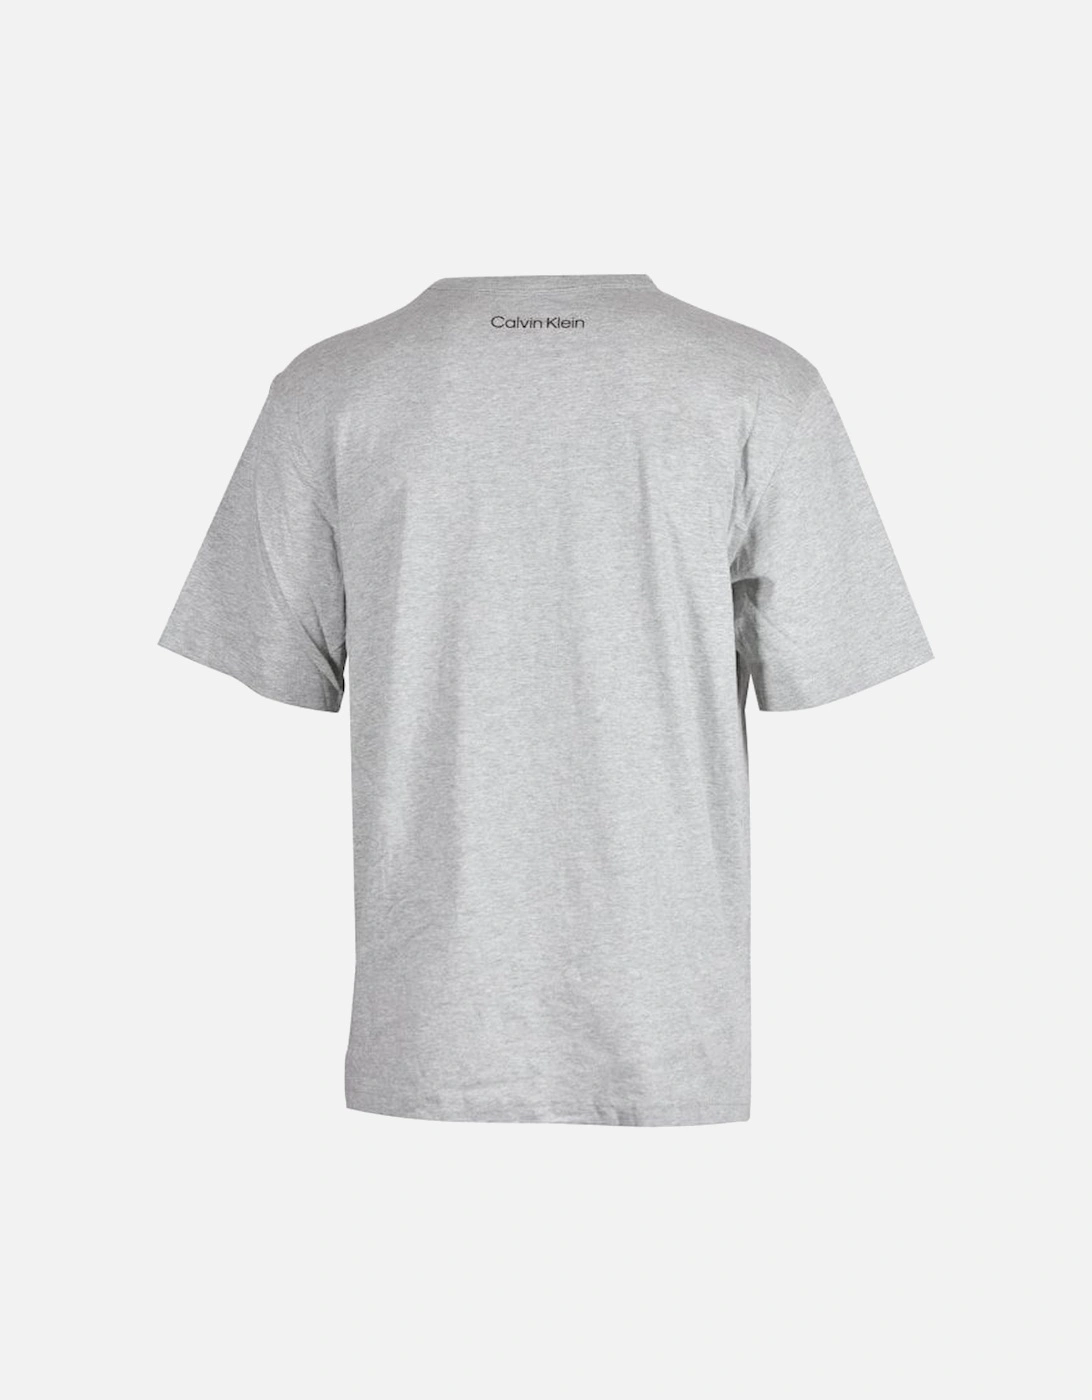 CK 96 Organic Cotton T-Shirt, Grey Heather